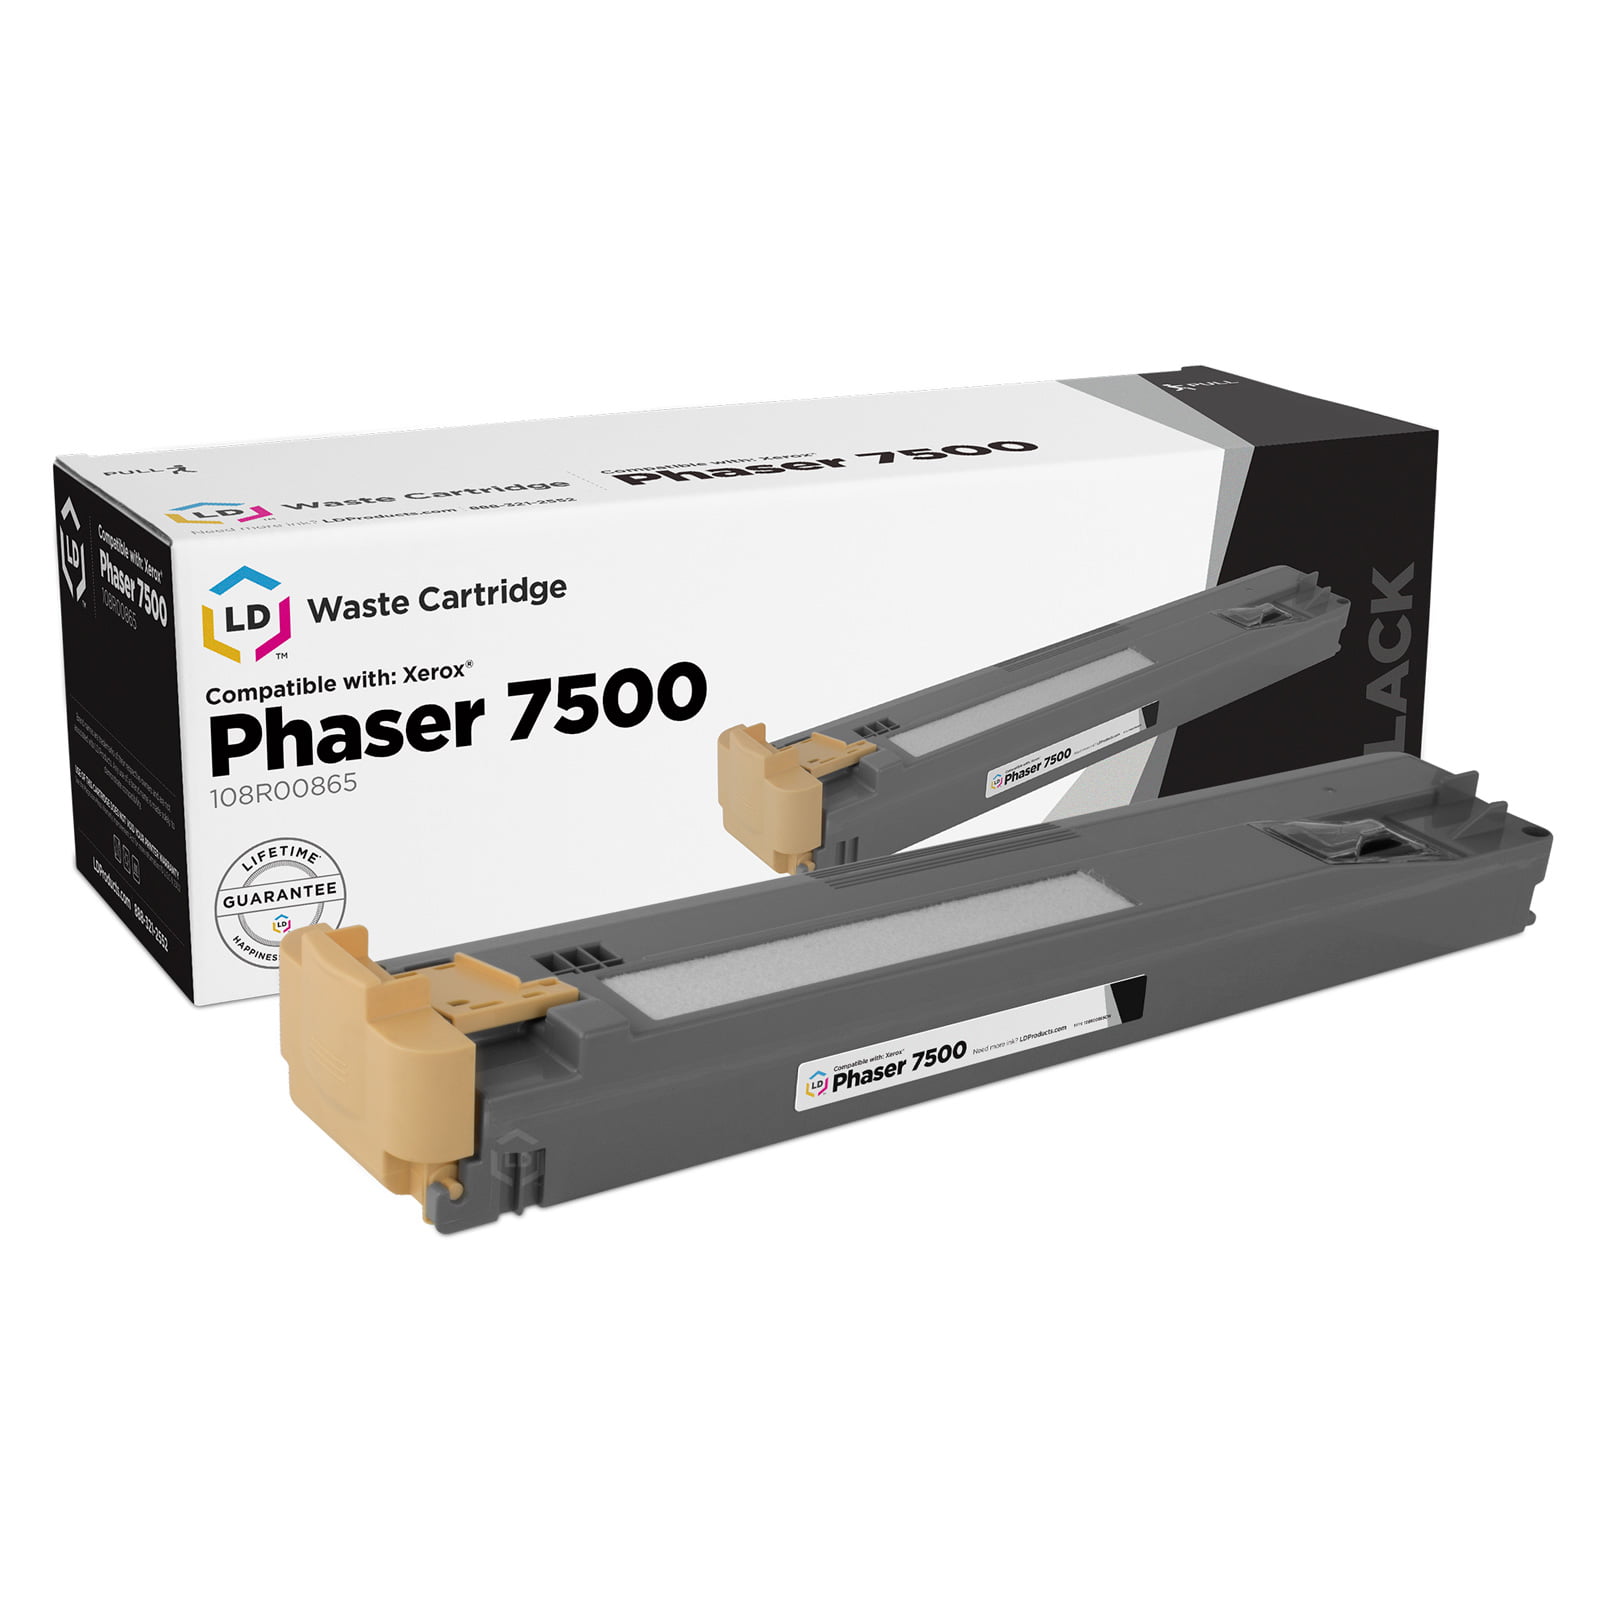 Phaser 7500 Waste Cartridge